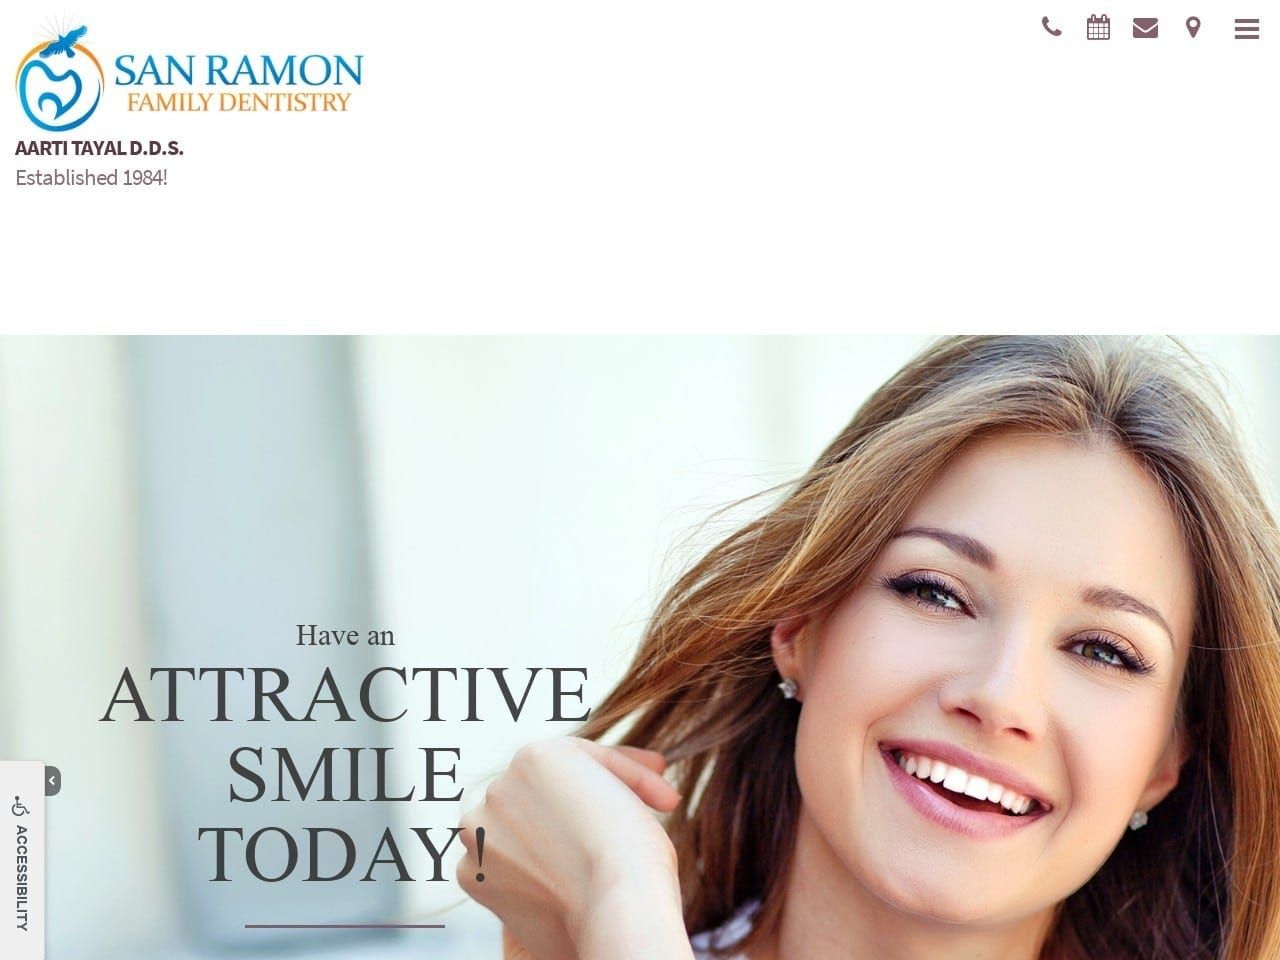 Sanramon Family Dentistry Website Screenshot from sanramonfamilydentistry.com